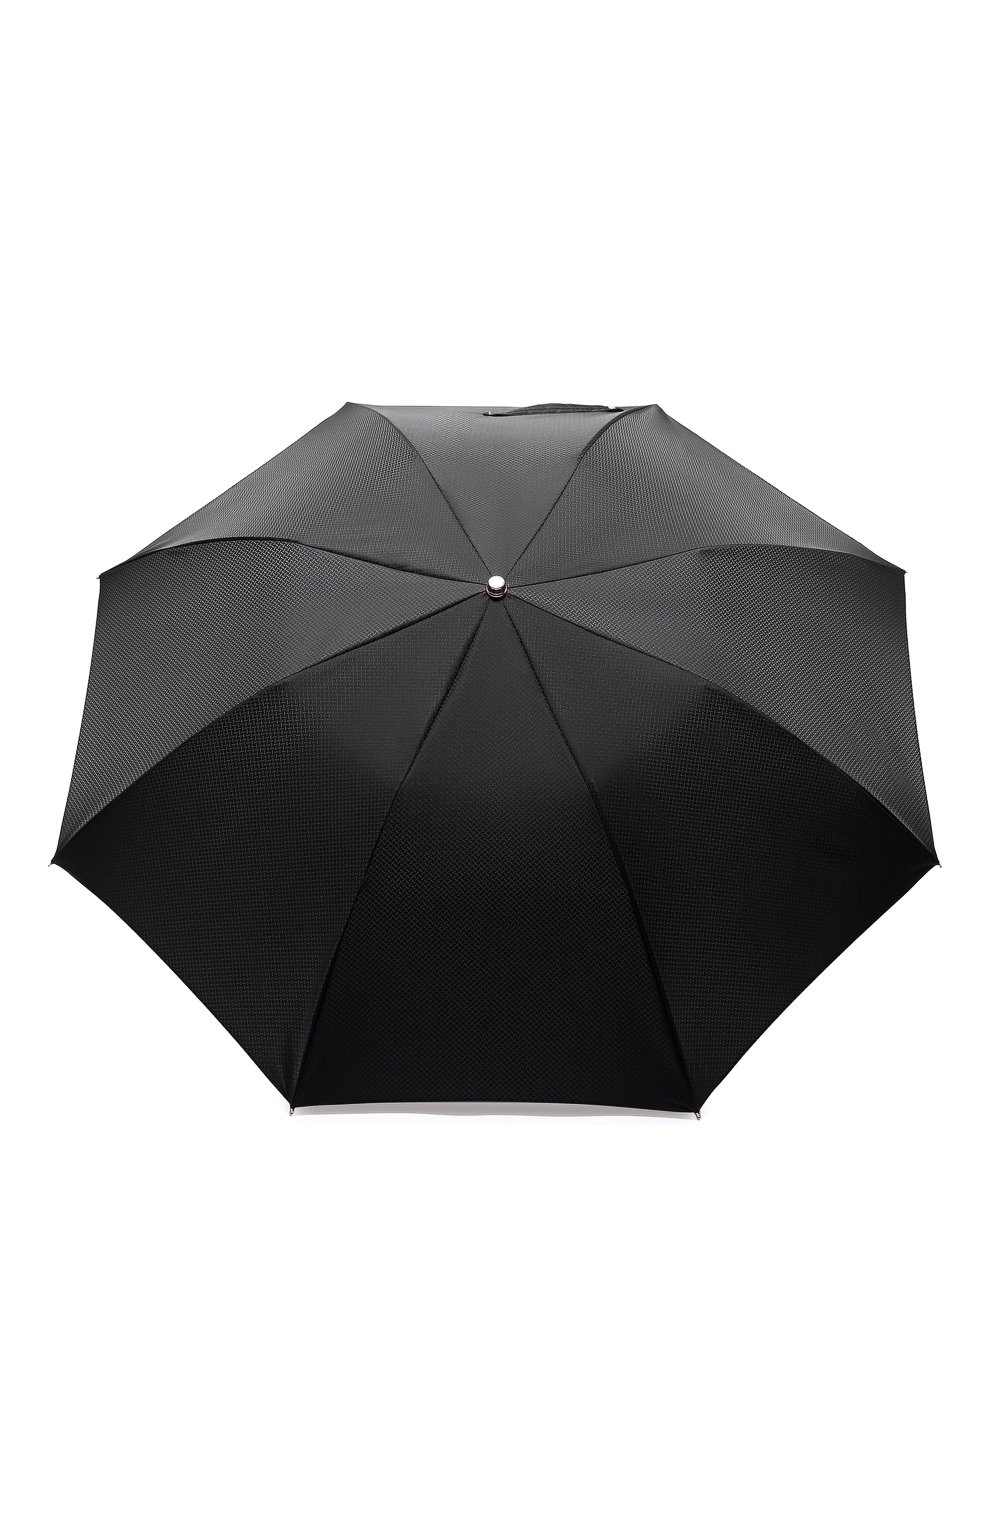 Мужской складной зонт PASOTTI OMBRELLI черного цвета, арт. 0MITU0 64S/SC0TLAND 50890/5 | Фото 1 (Материал: Текстиль, Синтетический материал, Металл)